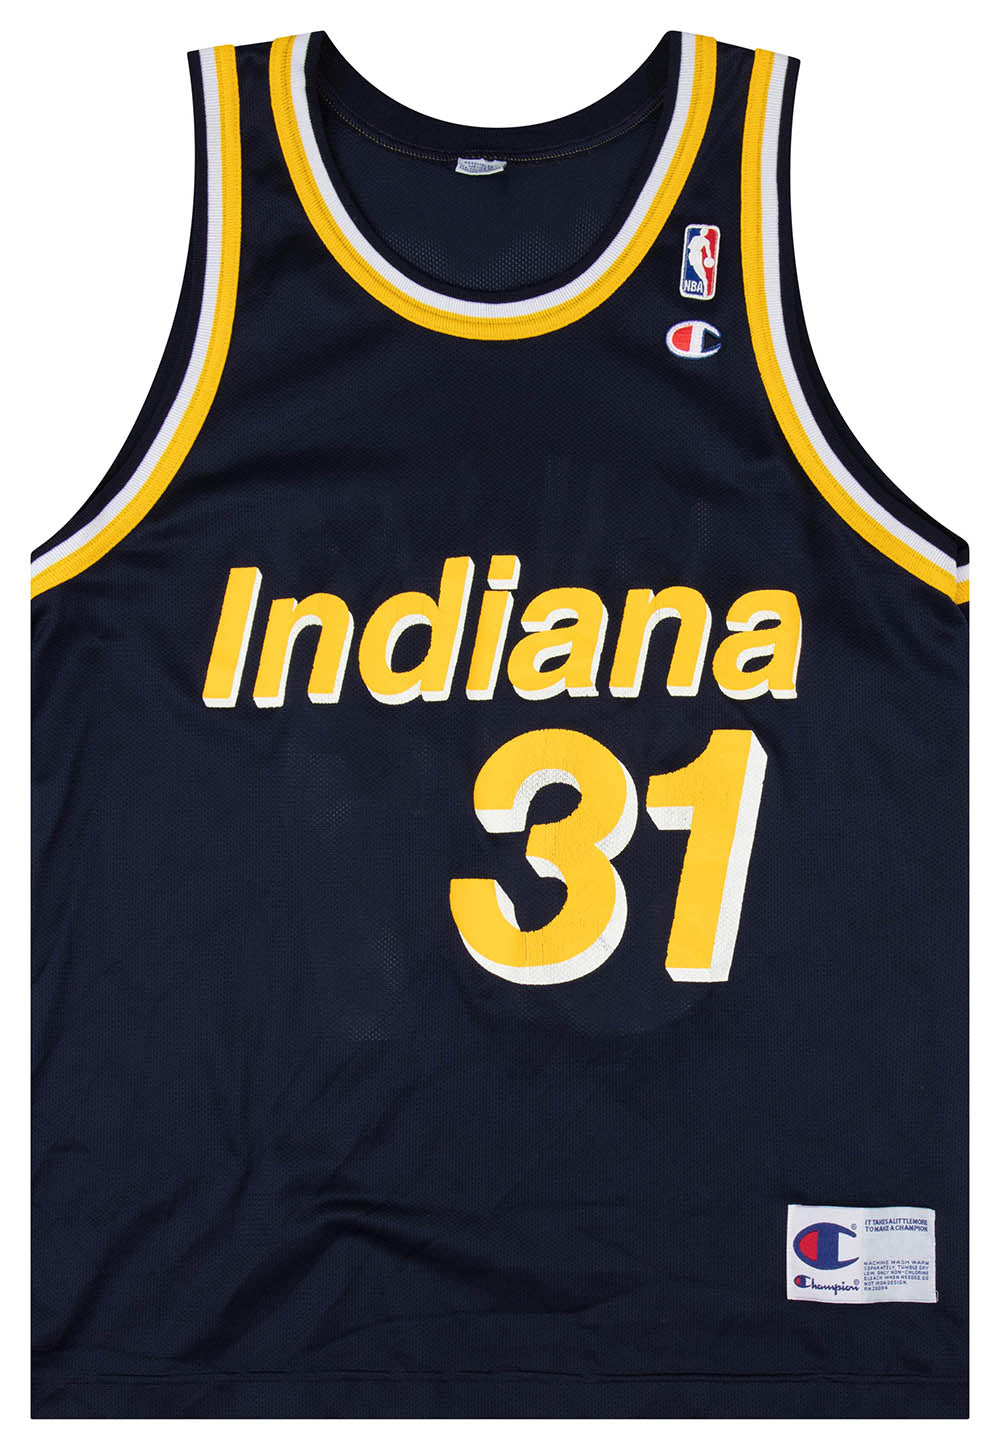 Champion NBA Jersey Indiana Pacers #31 Reggie Miller sz 44 black yellow  davis LE